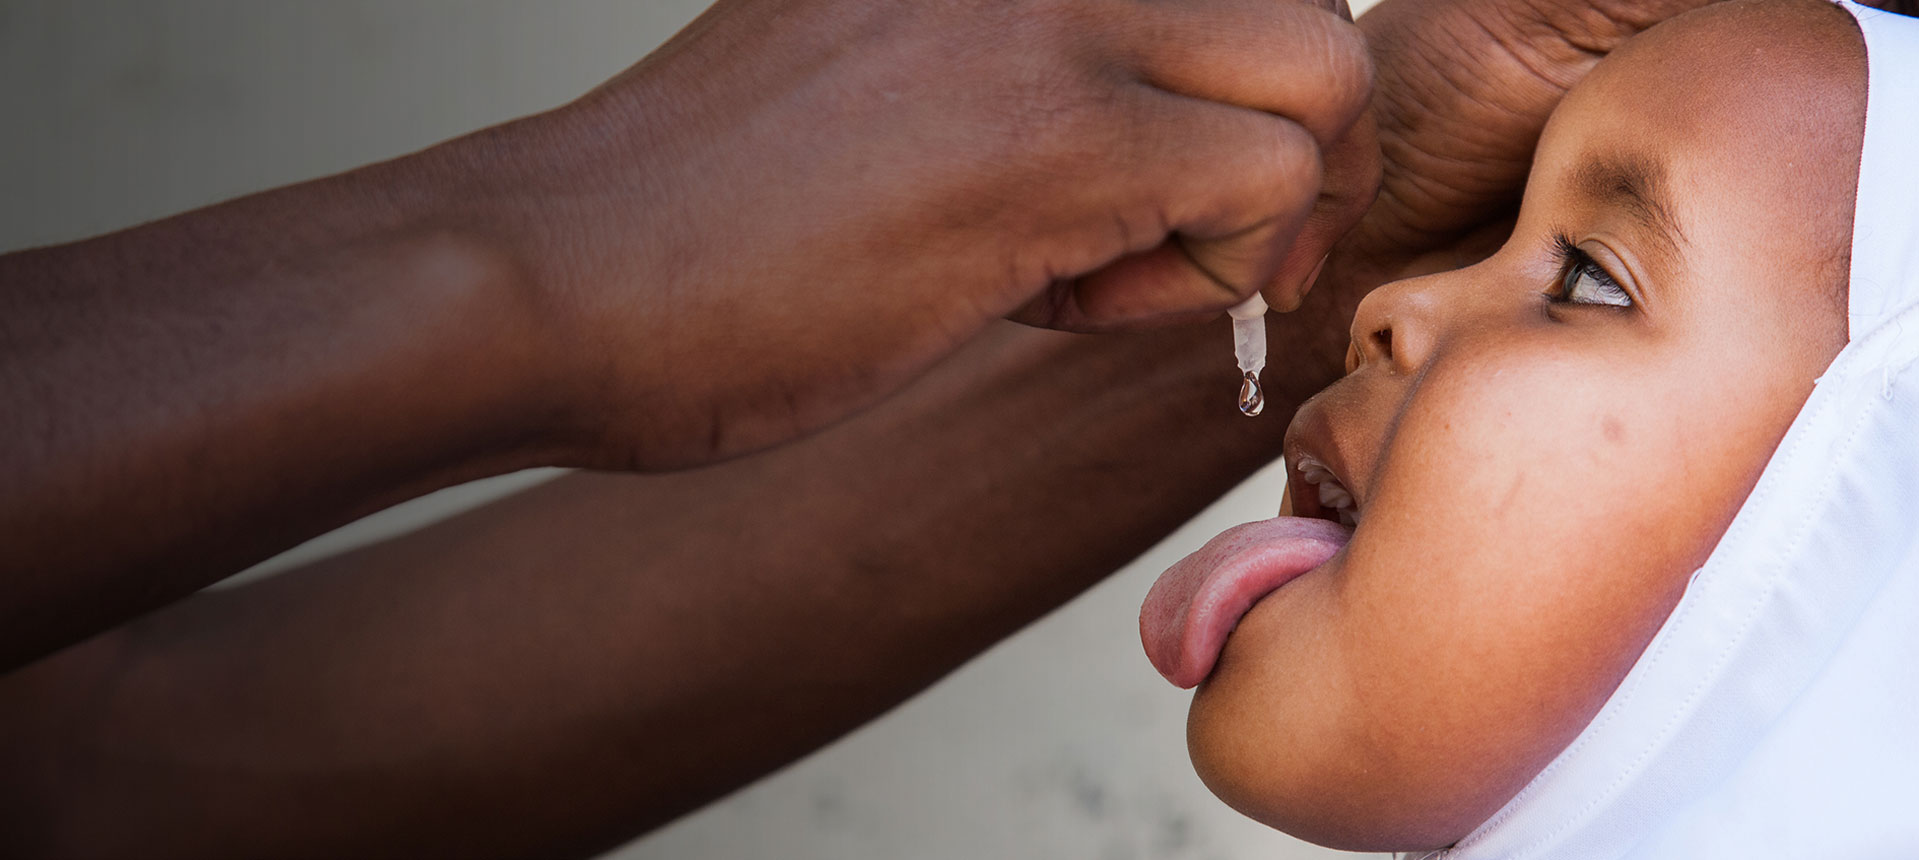 Image of baby receiving polio vaccine